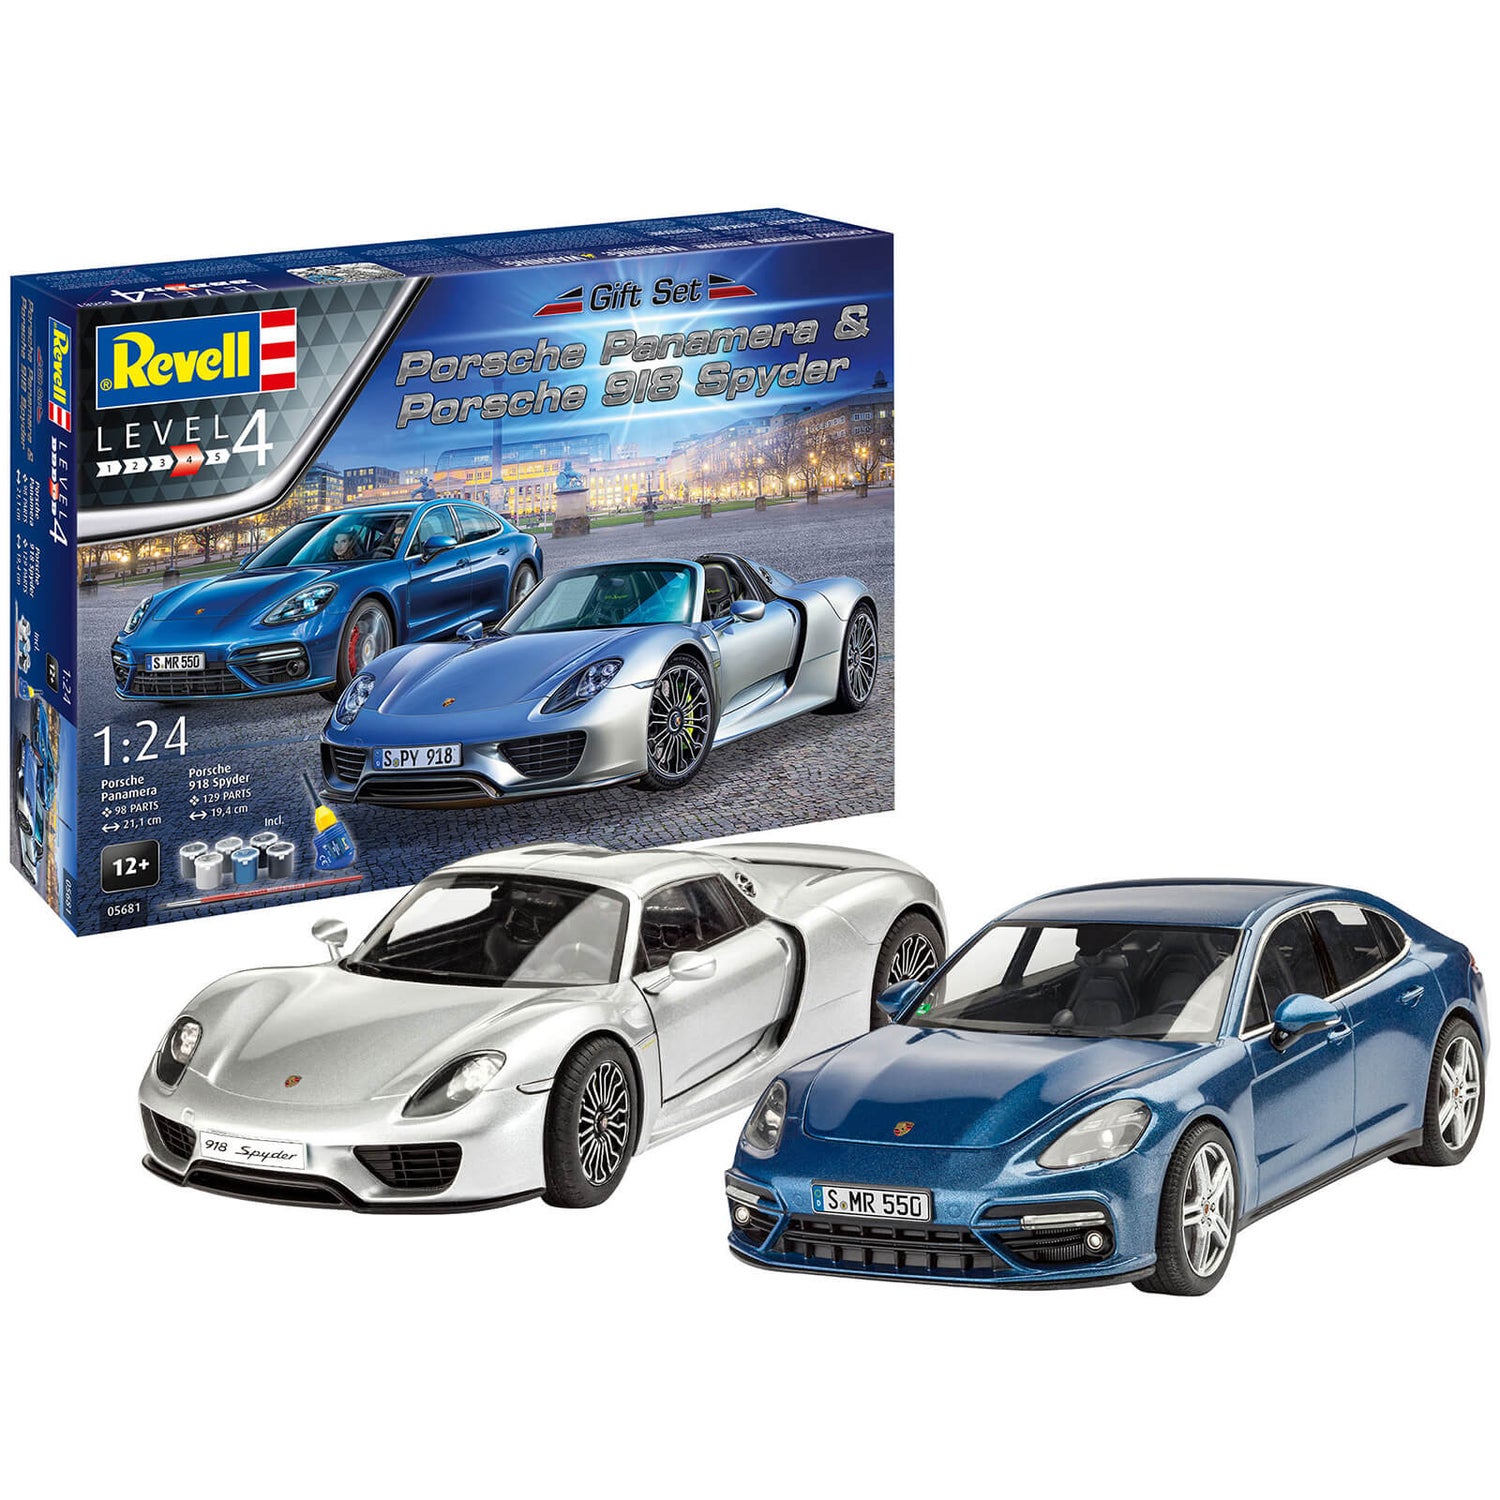 Porsche Model Kit Gift Set (1:24 Scale)